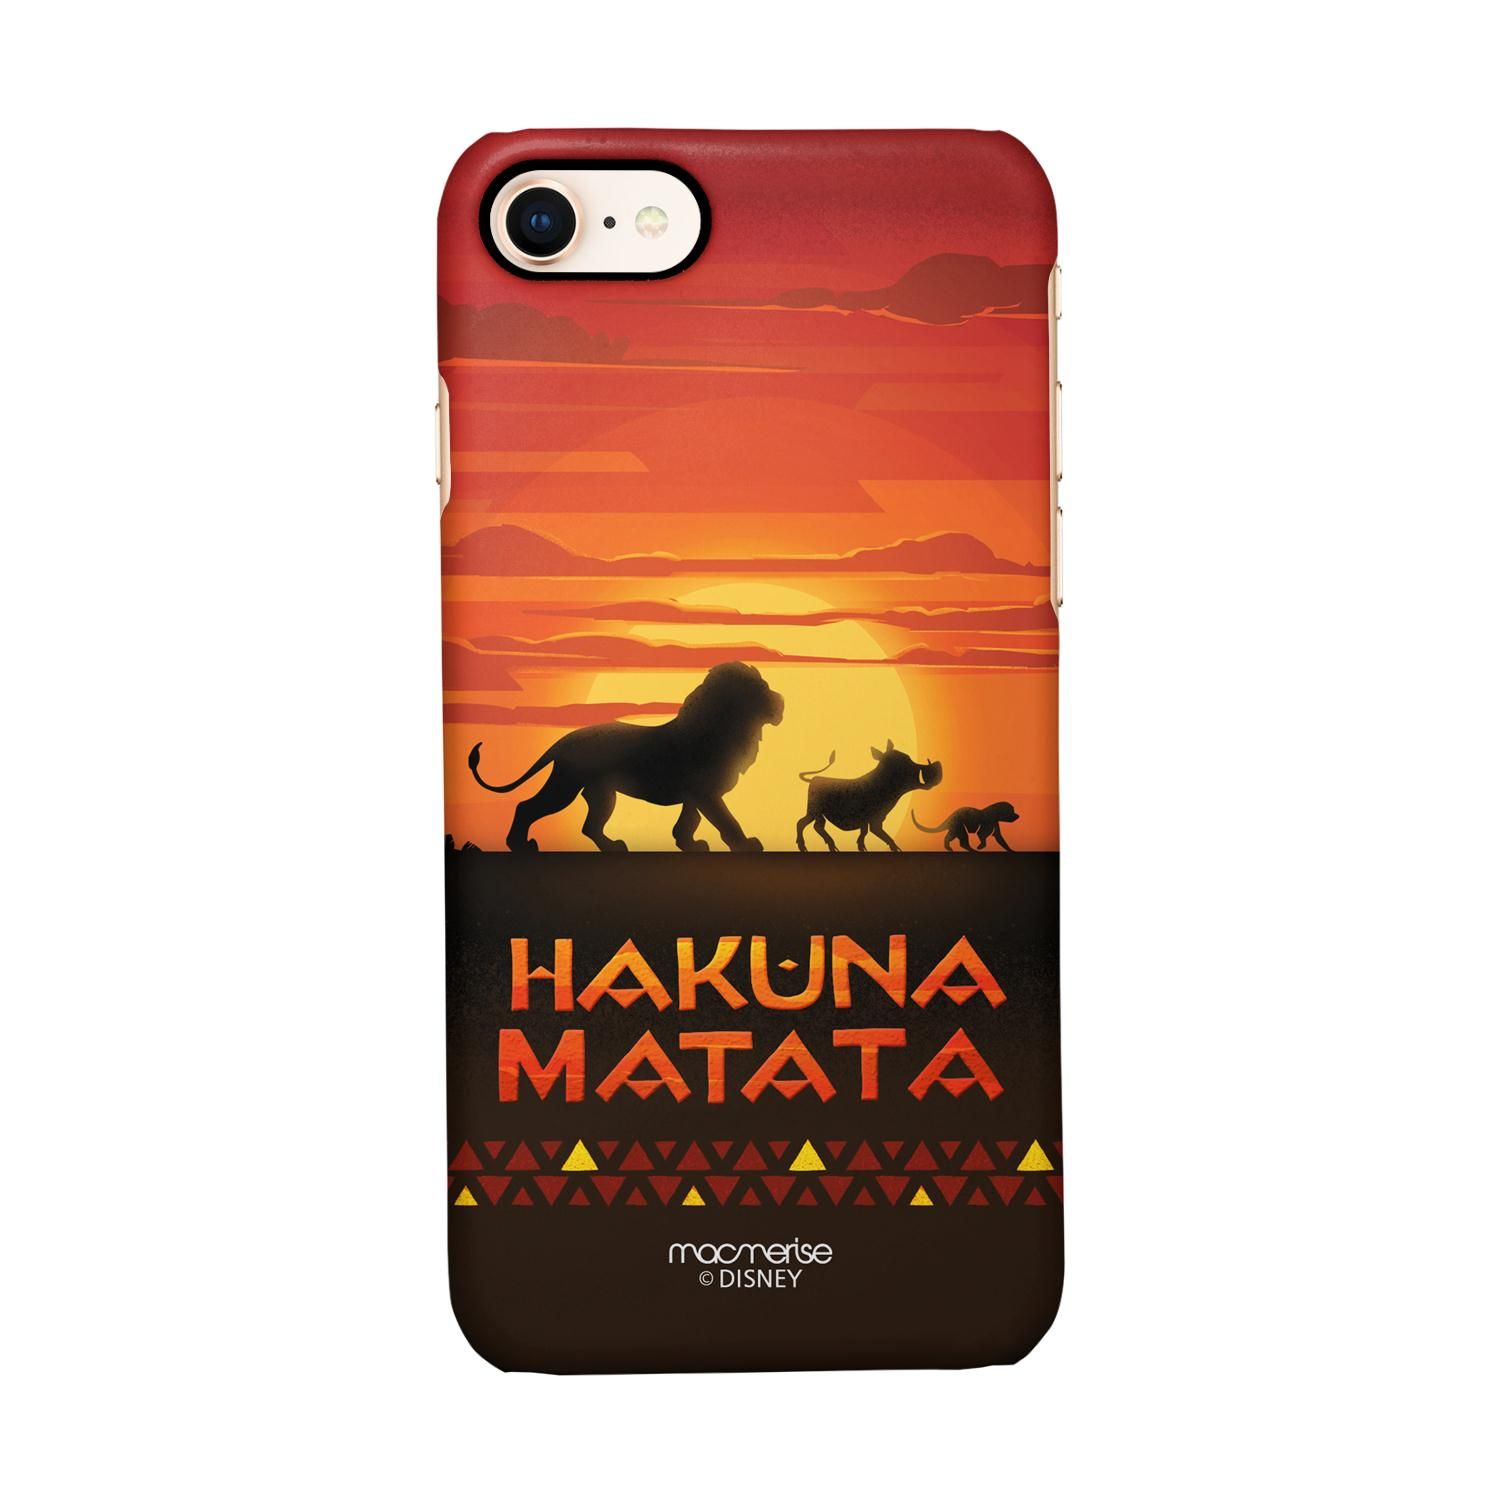 Buy Hakuna Matata - Sleek Phone Case for iPhone 7 Online